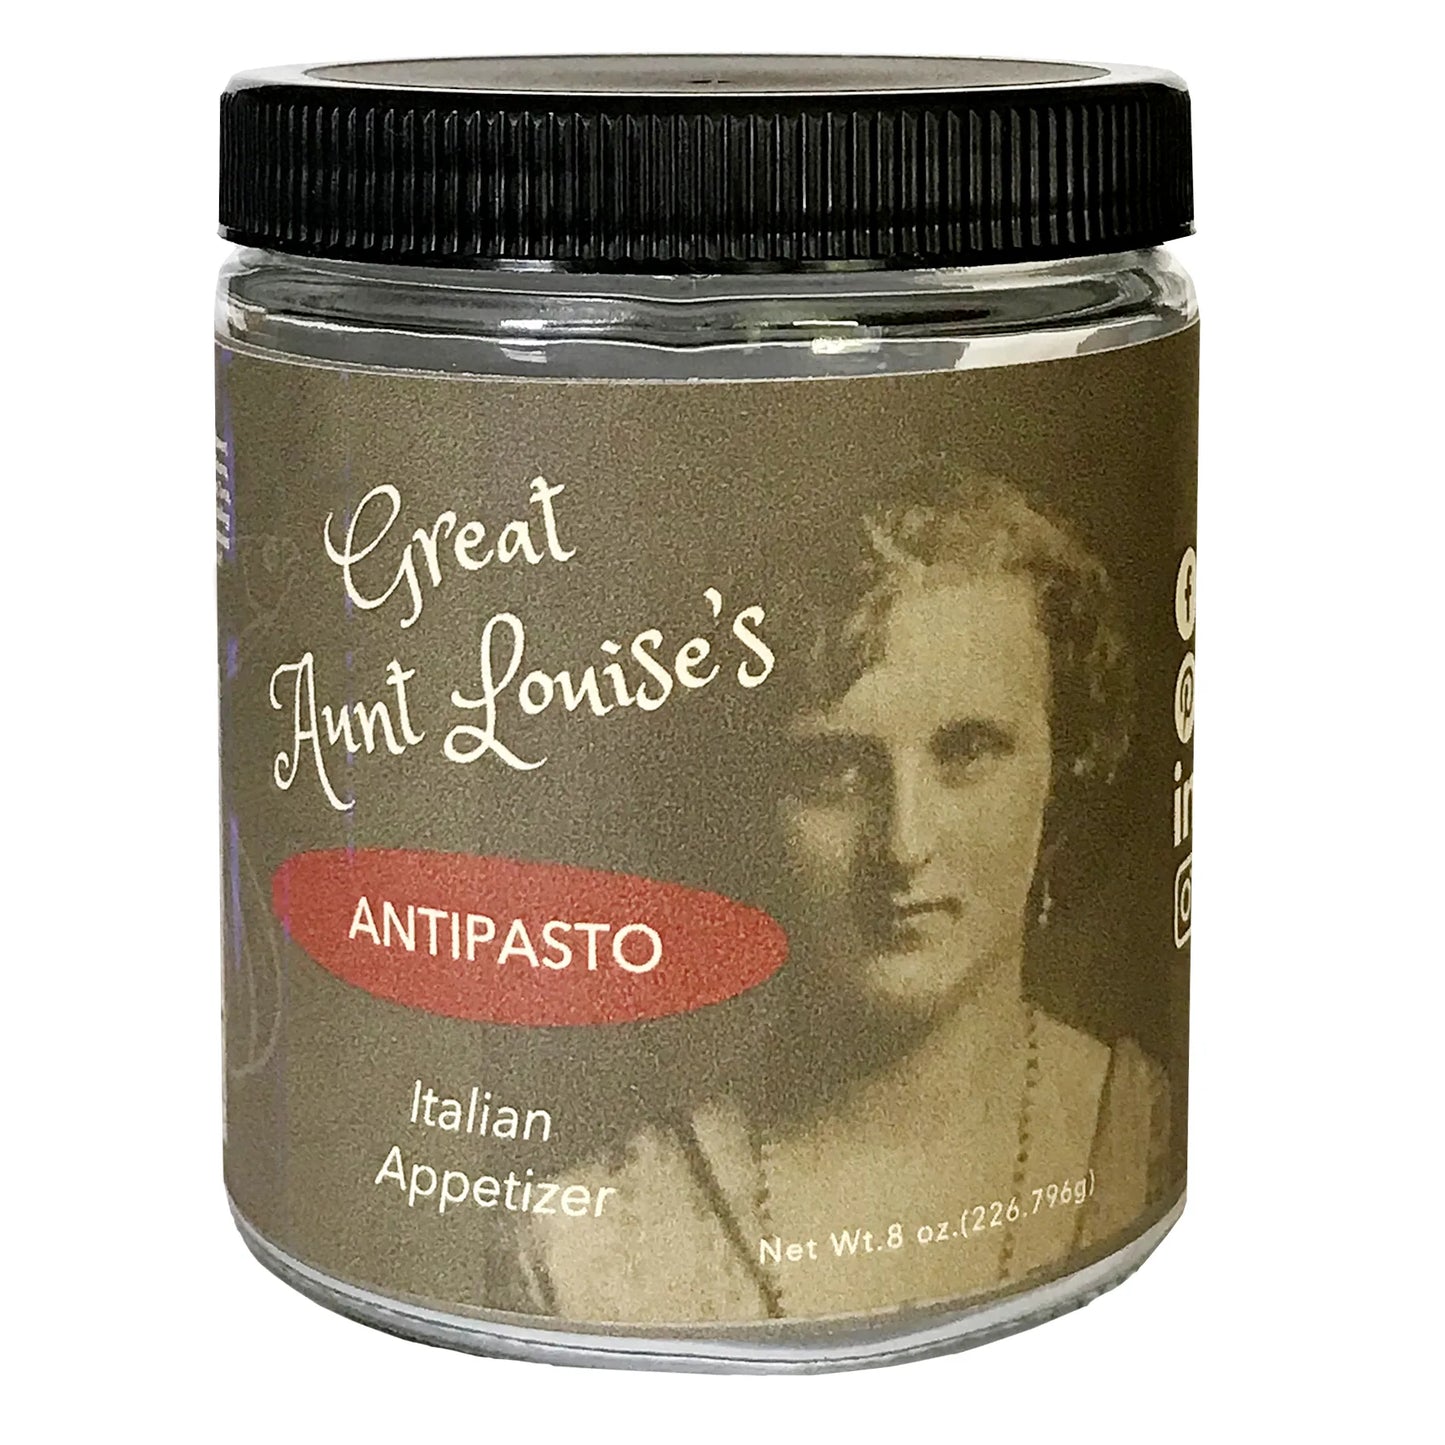 Great Aunt Louise's - Antipasto